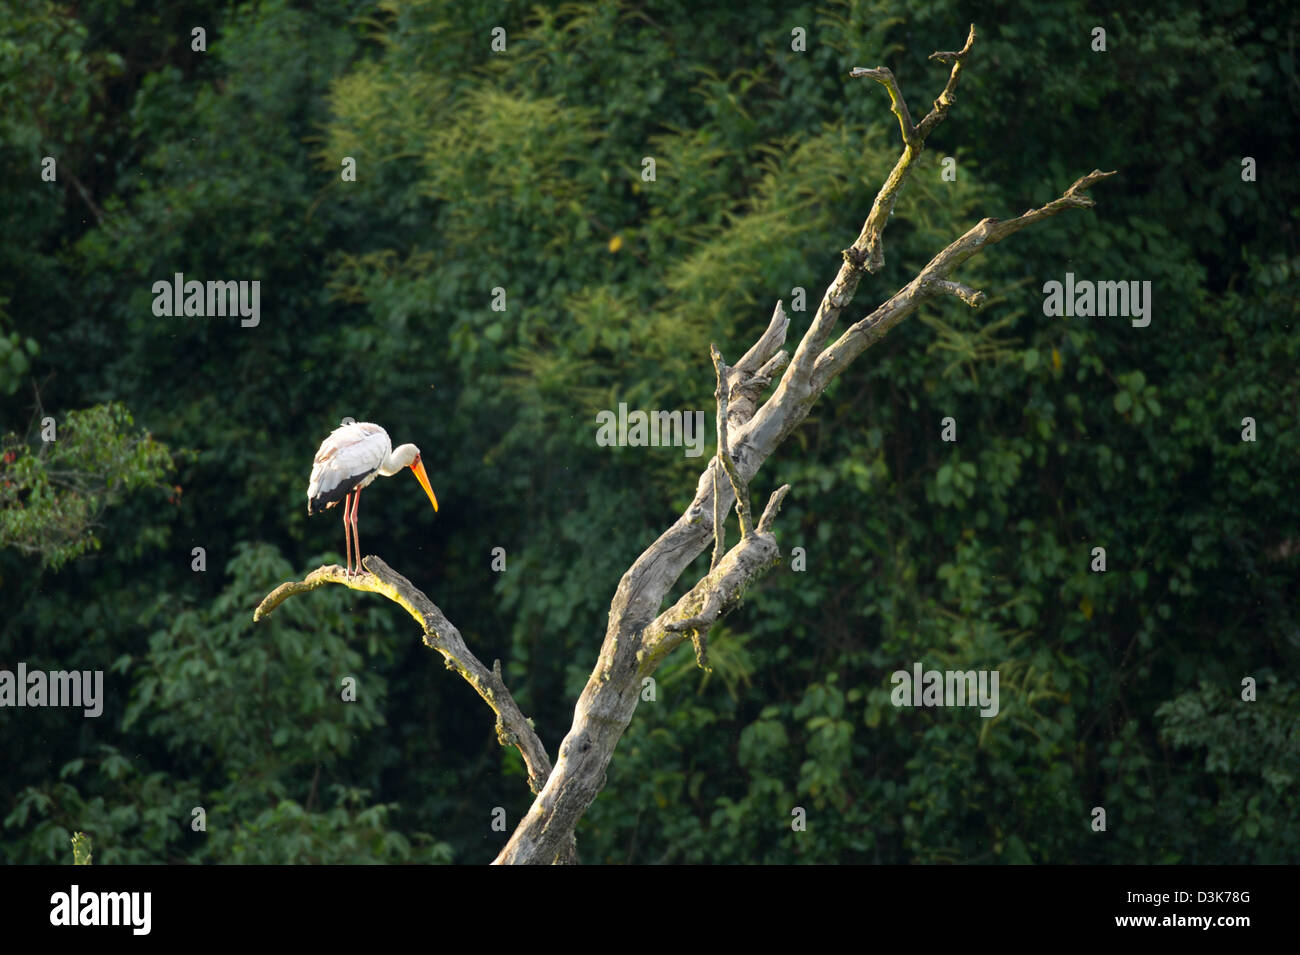 Yellow-billed Stork, Mycteria ibis, Saiwa Swamp National Park, Kenya Stock Photo